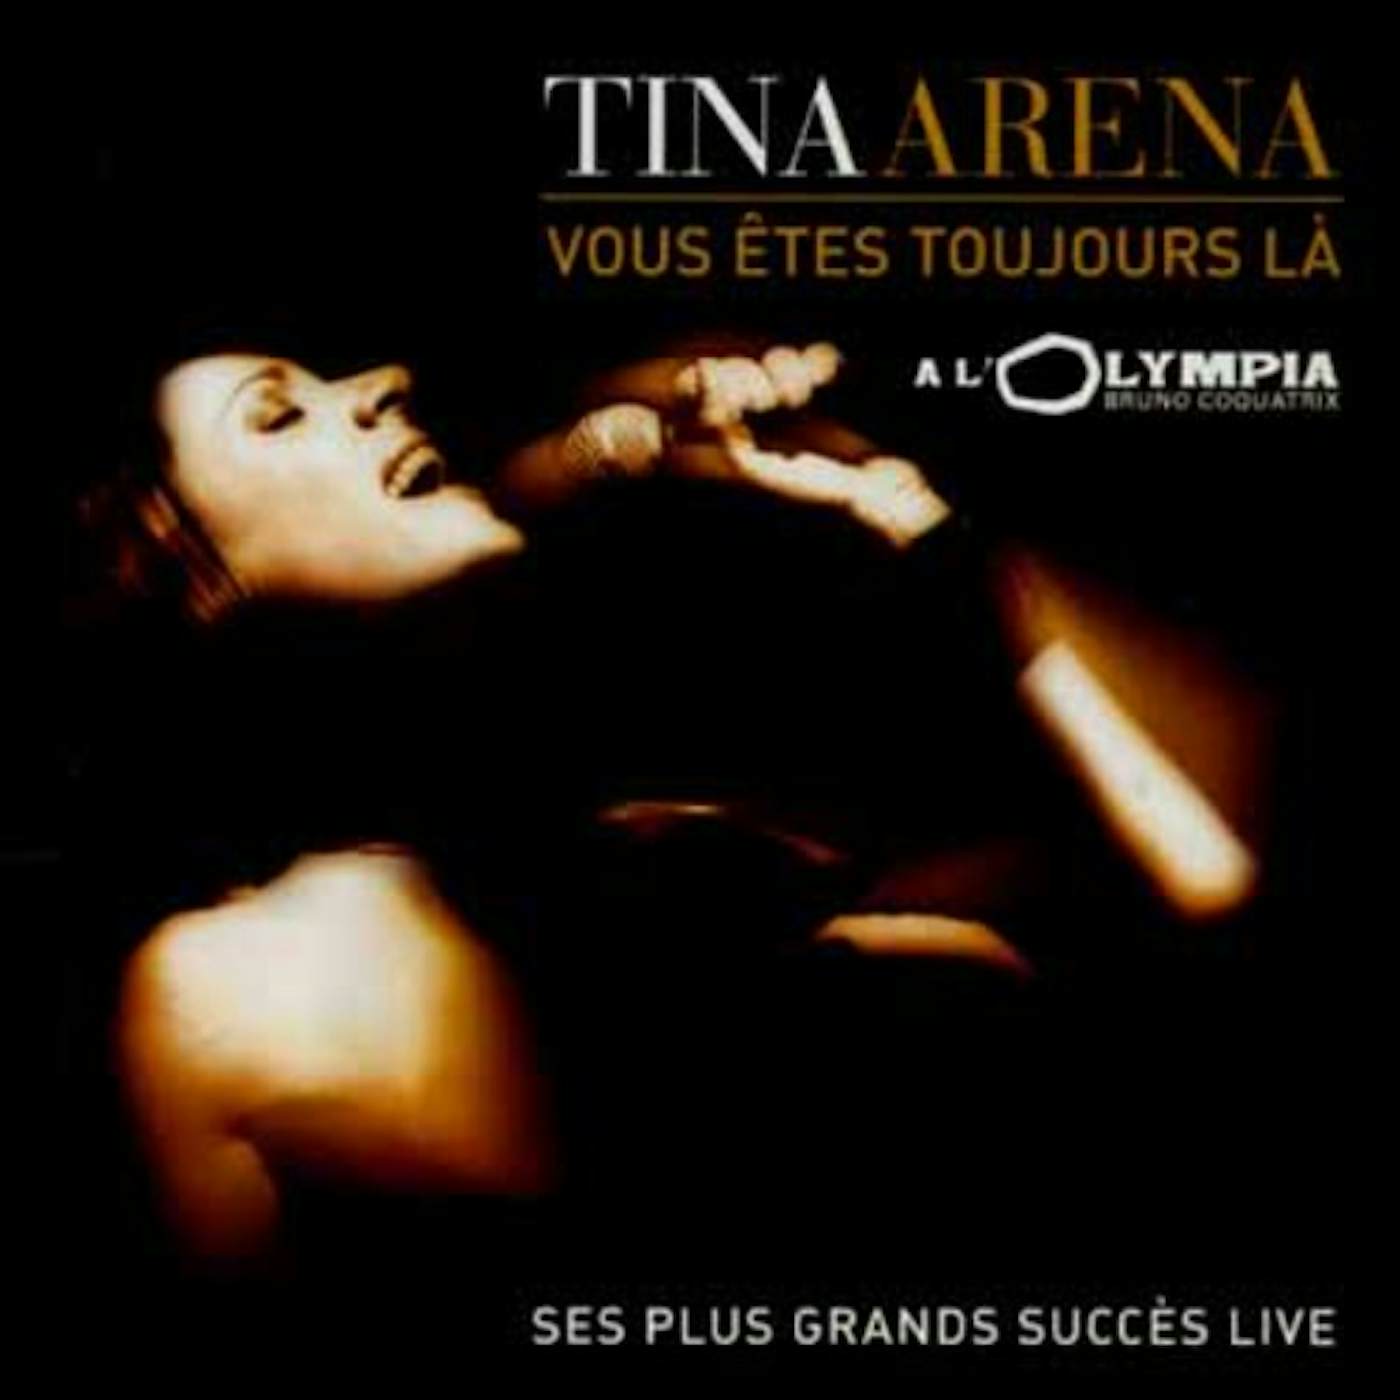 Tina Arena VOUS ETES TOUJOURS CD